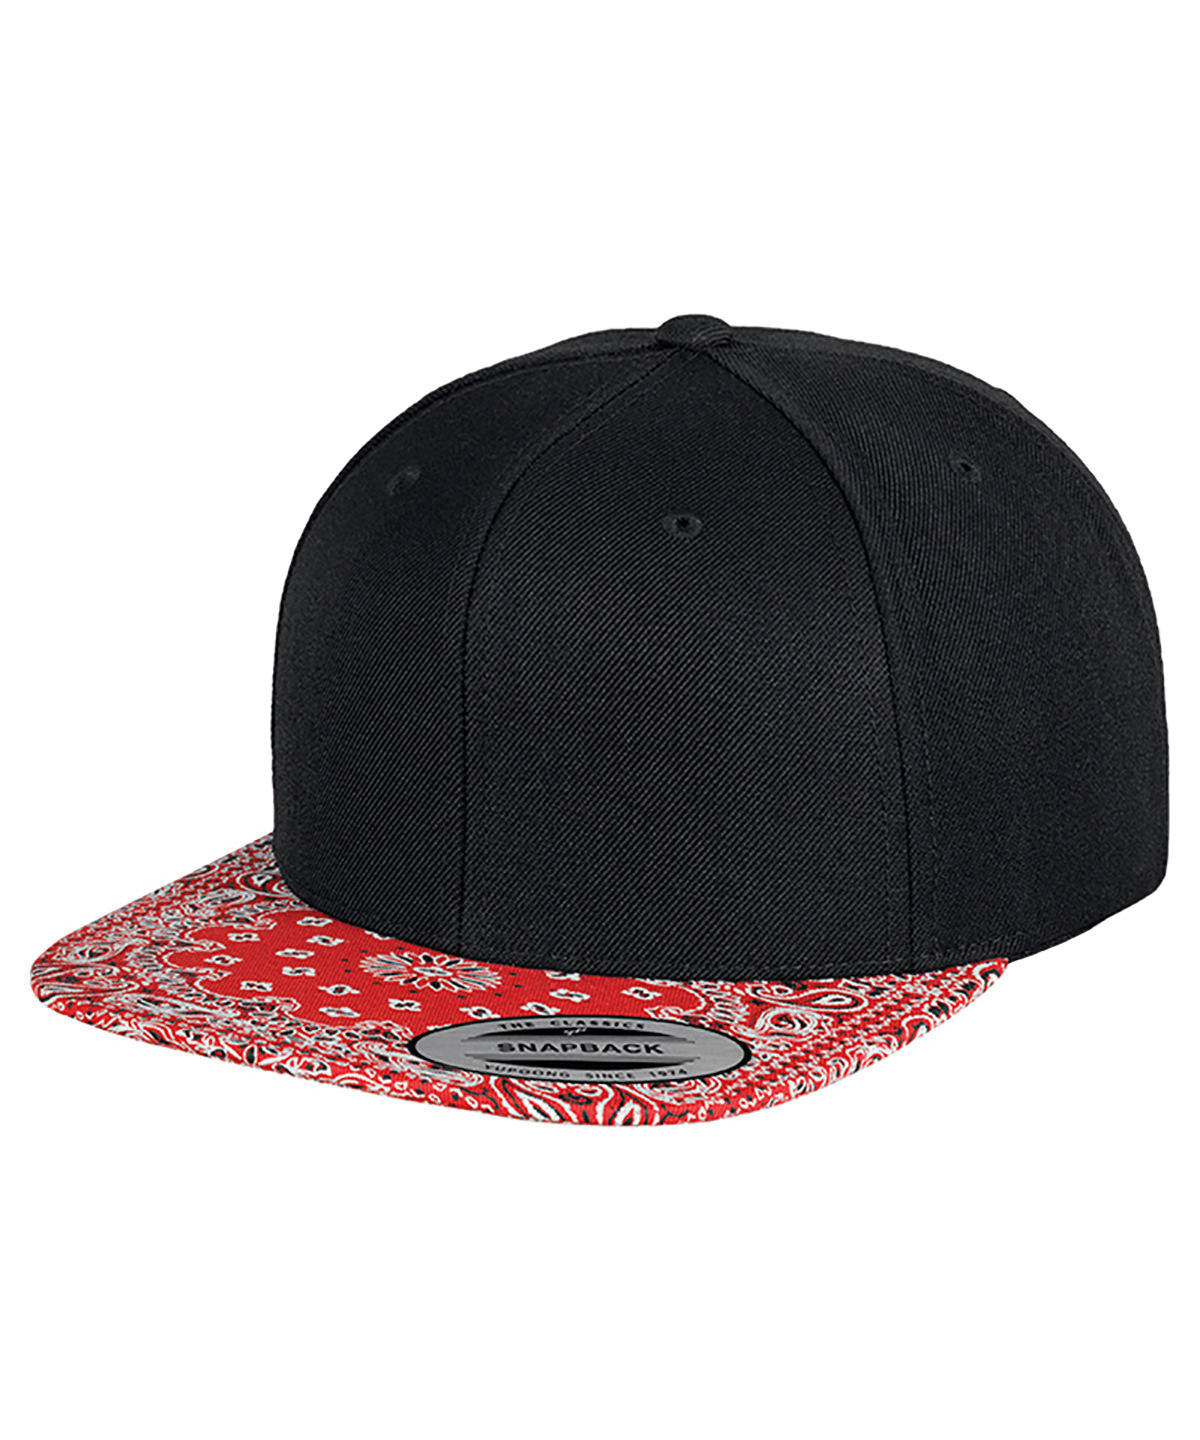 Black/Bandana Red - Fashion print snapback (6089DESIGNER) Caps Flexfit by Yupoong Headwear Schoolwear Centres